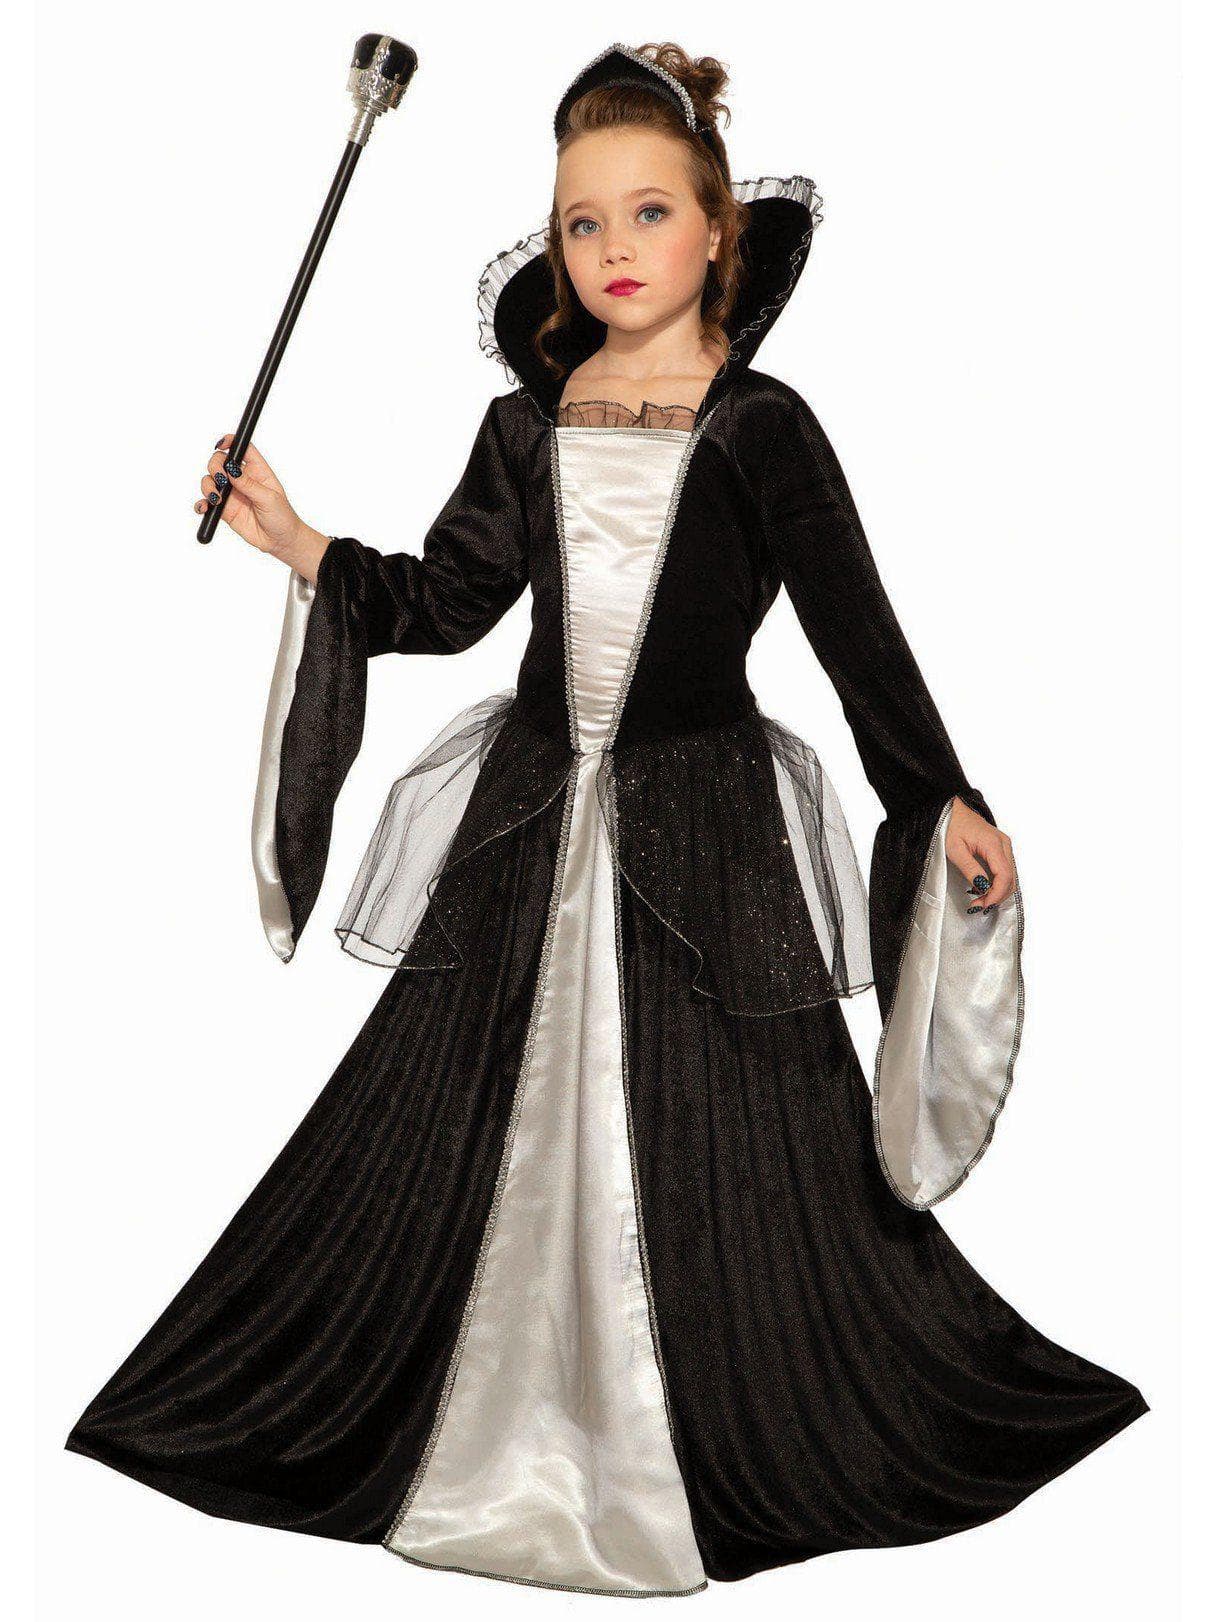 Kid's Dark Queen Costume - costumes.com